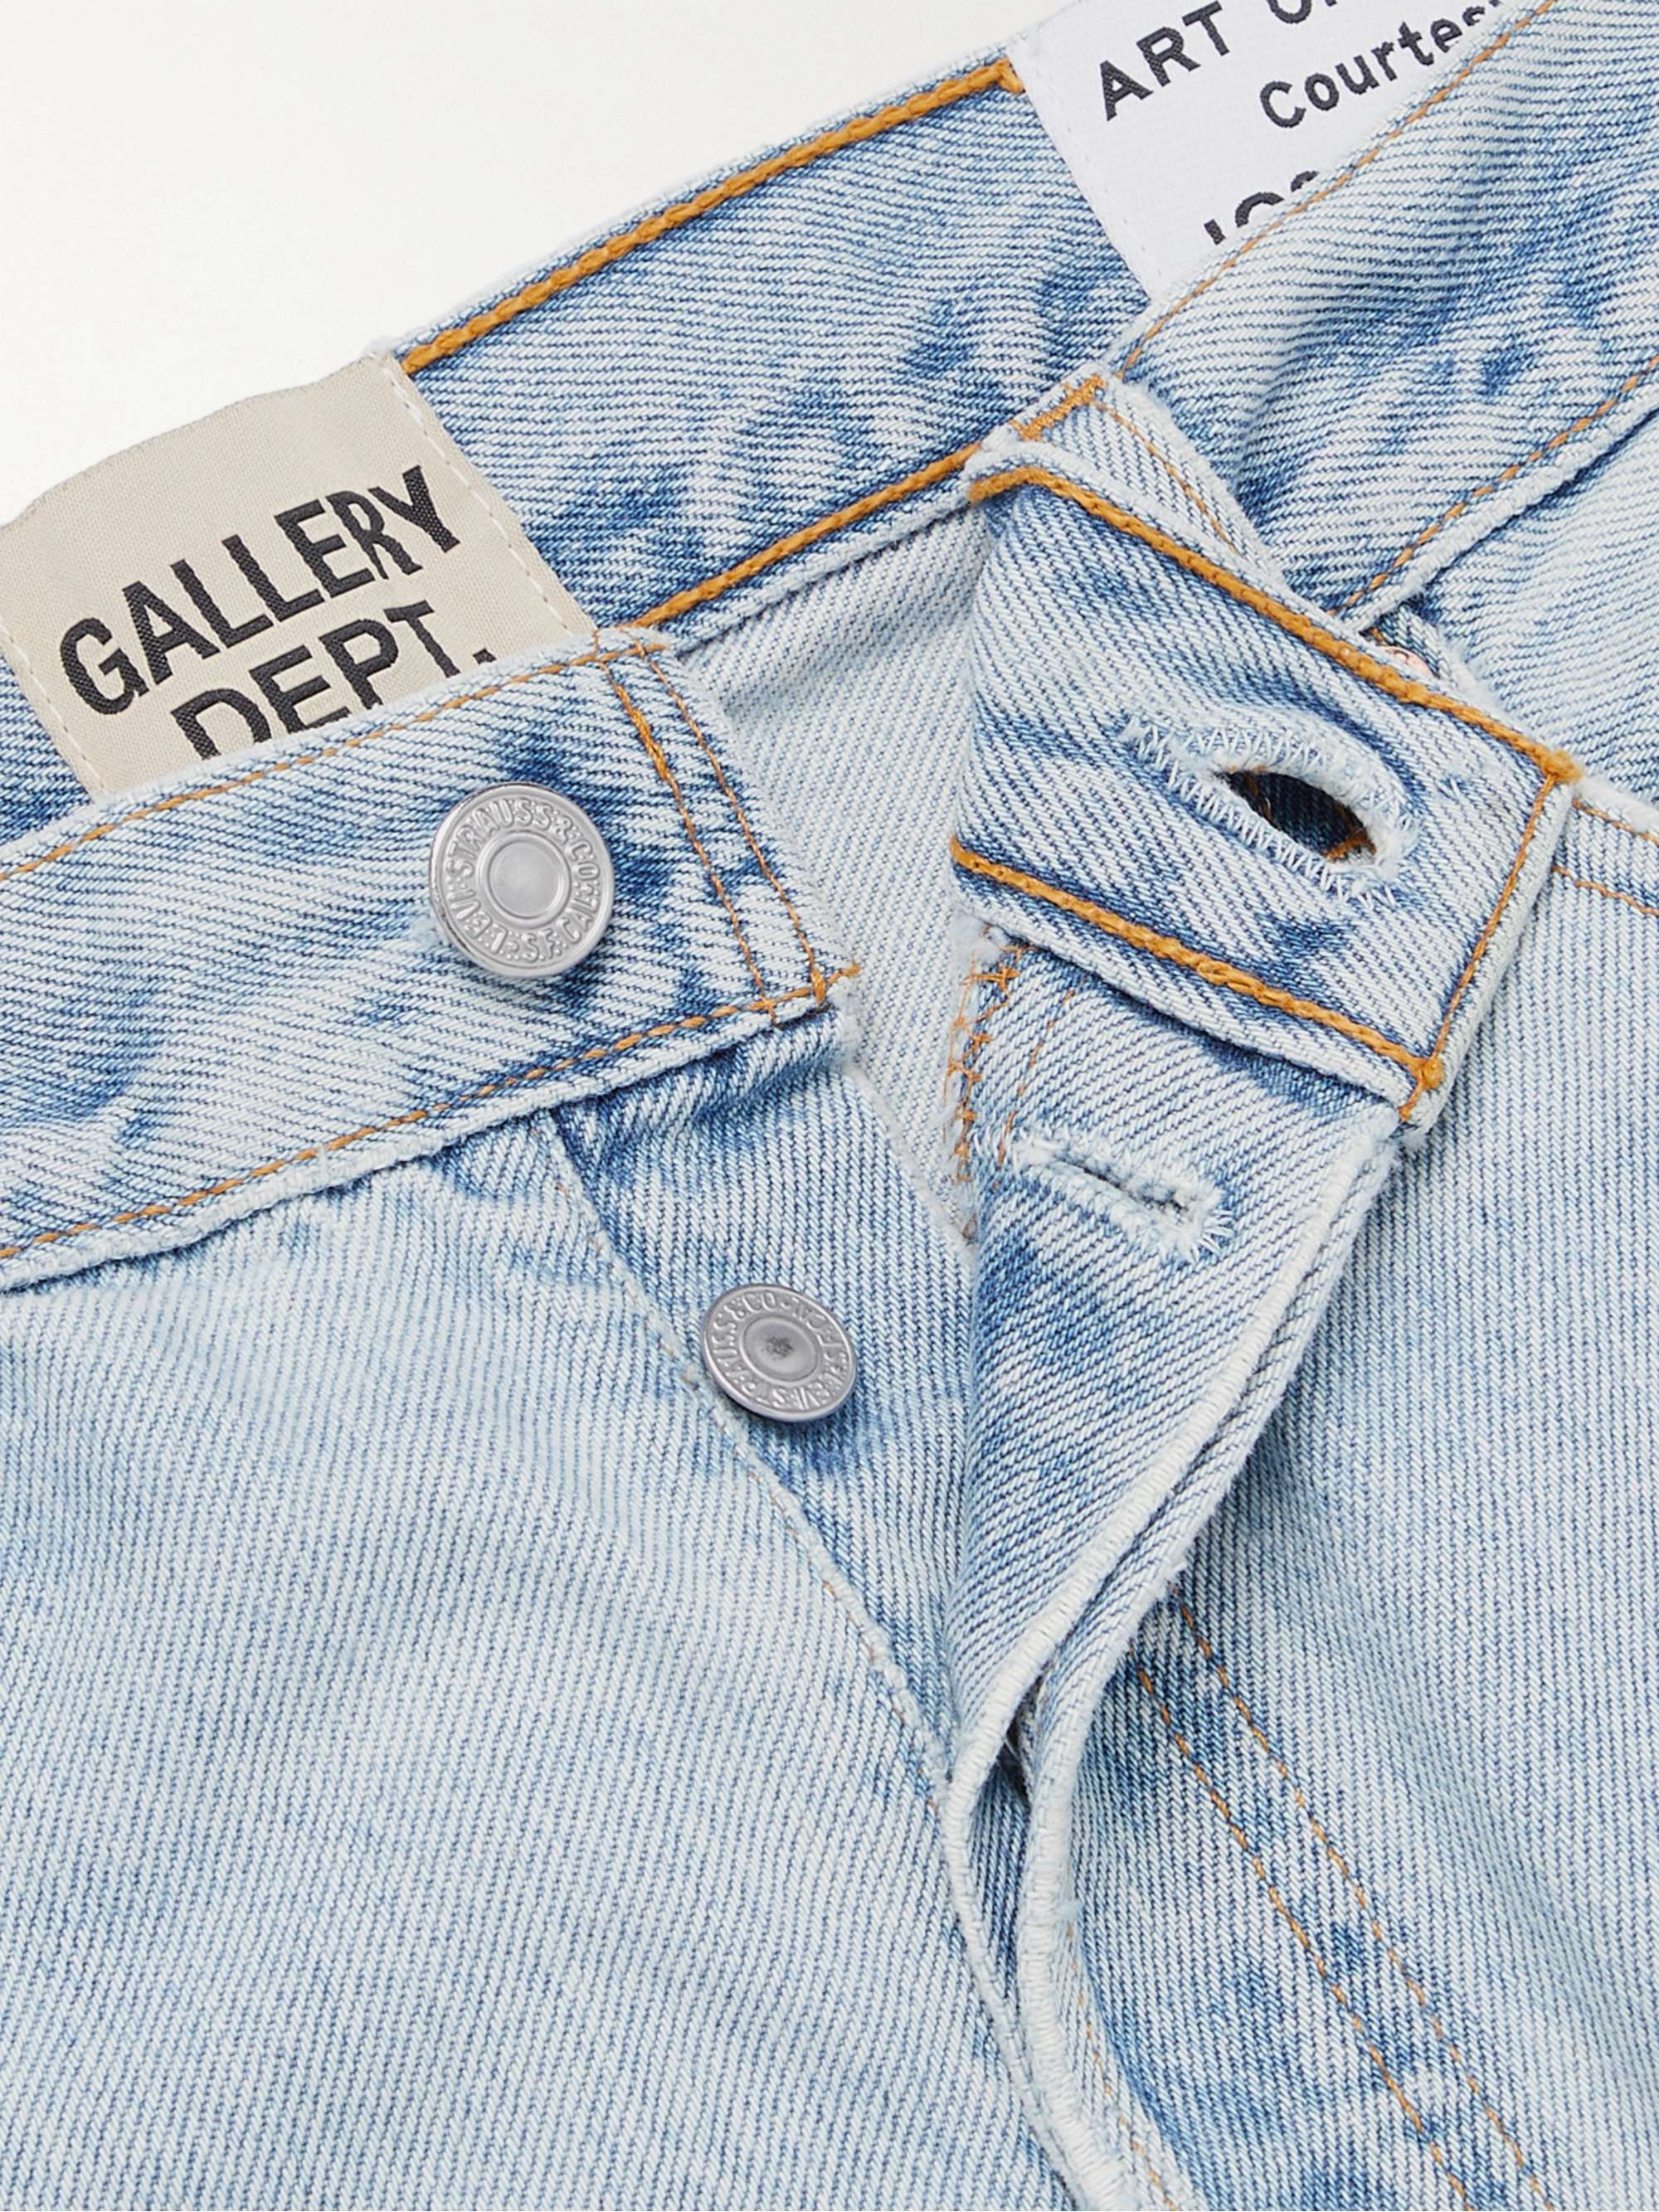 GALLERY DEPT. La Flare Slim-Fit Distressed Denim Jeans